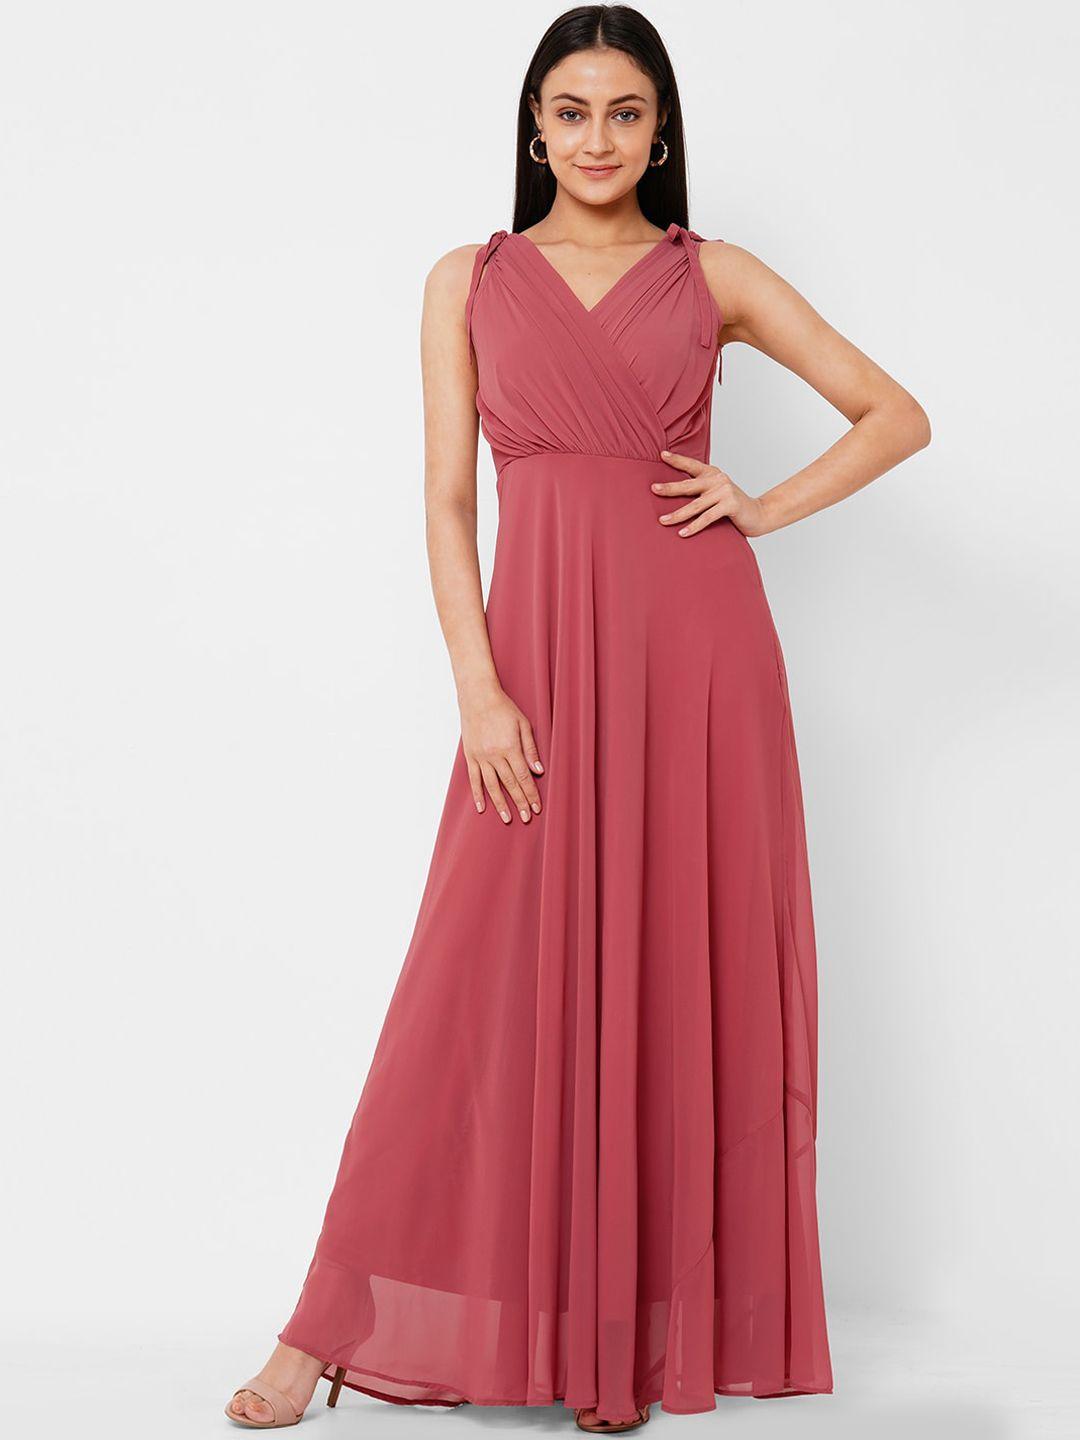 20dress rose georgette maxi dress